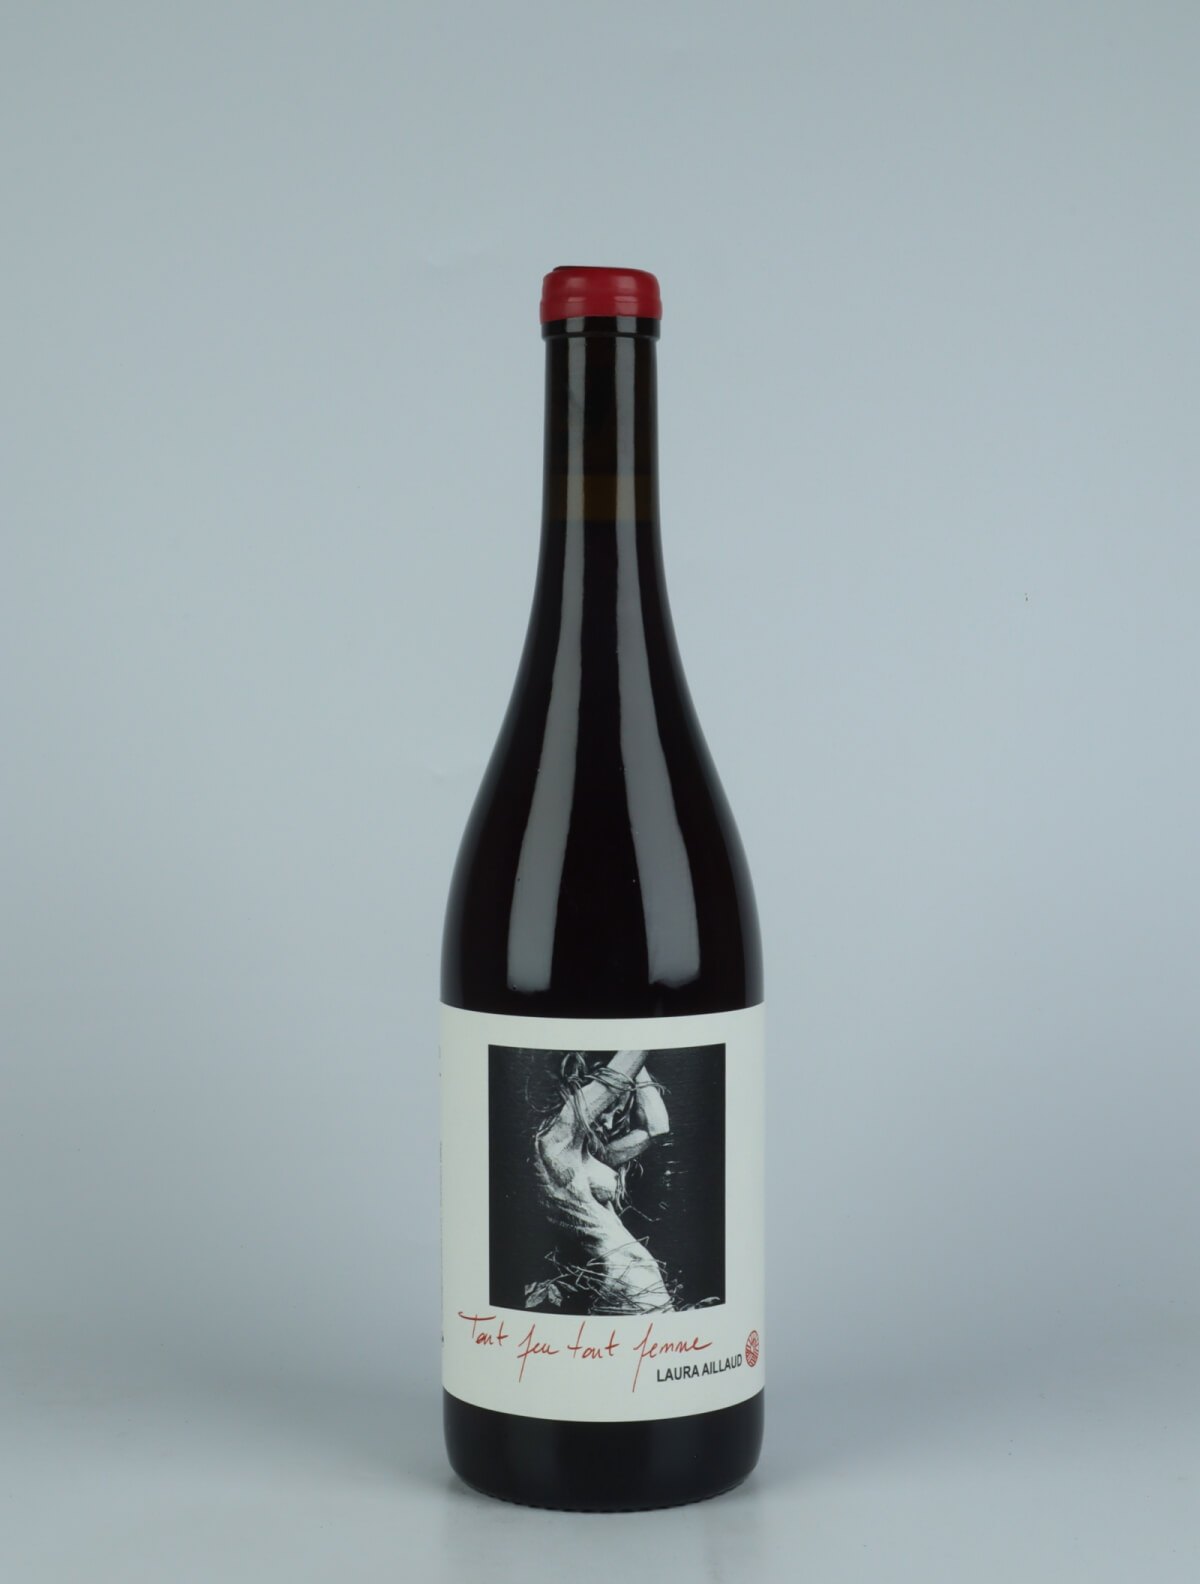 A bottle 2022 Tout Feu Tout Femme Red wine from Laura Aillaud, Rhône in France